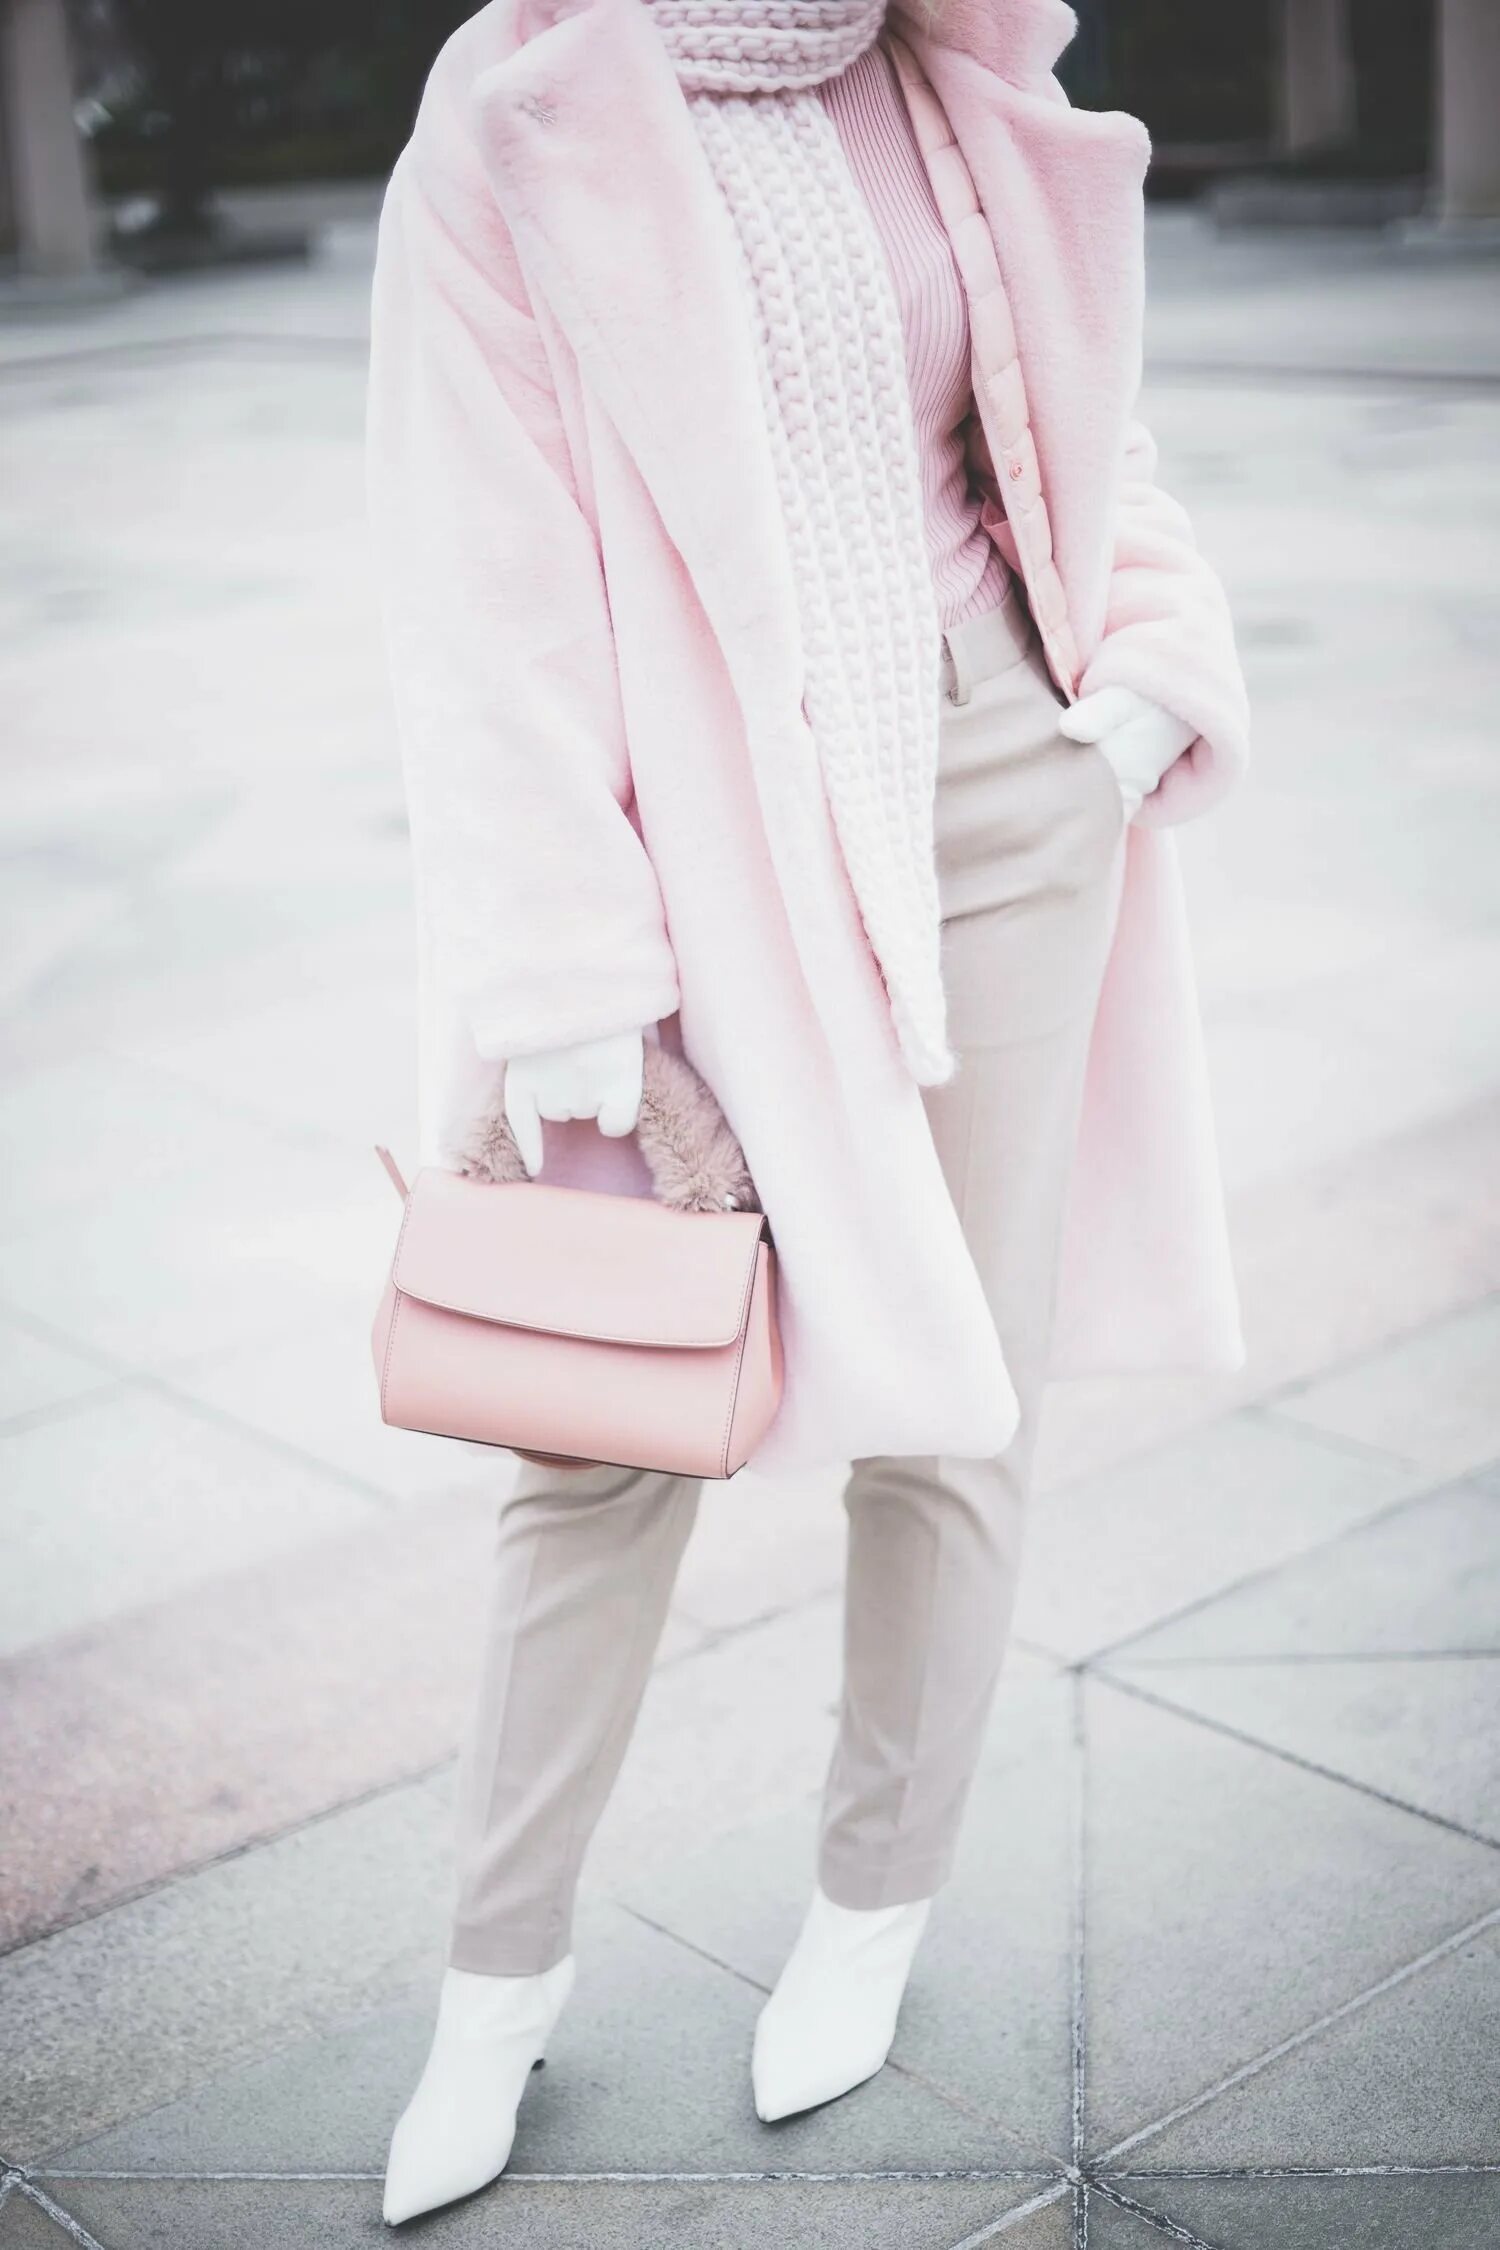 Розовое пальто шапка. Образы с розовым пальто. Шарф к розовому пальто. Шарф с нежно розовым пальто. Шапка к розовому пальто.